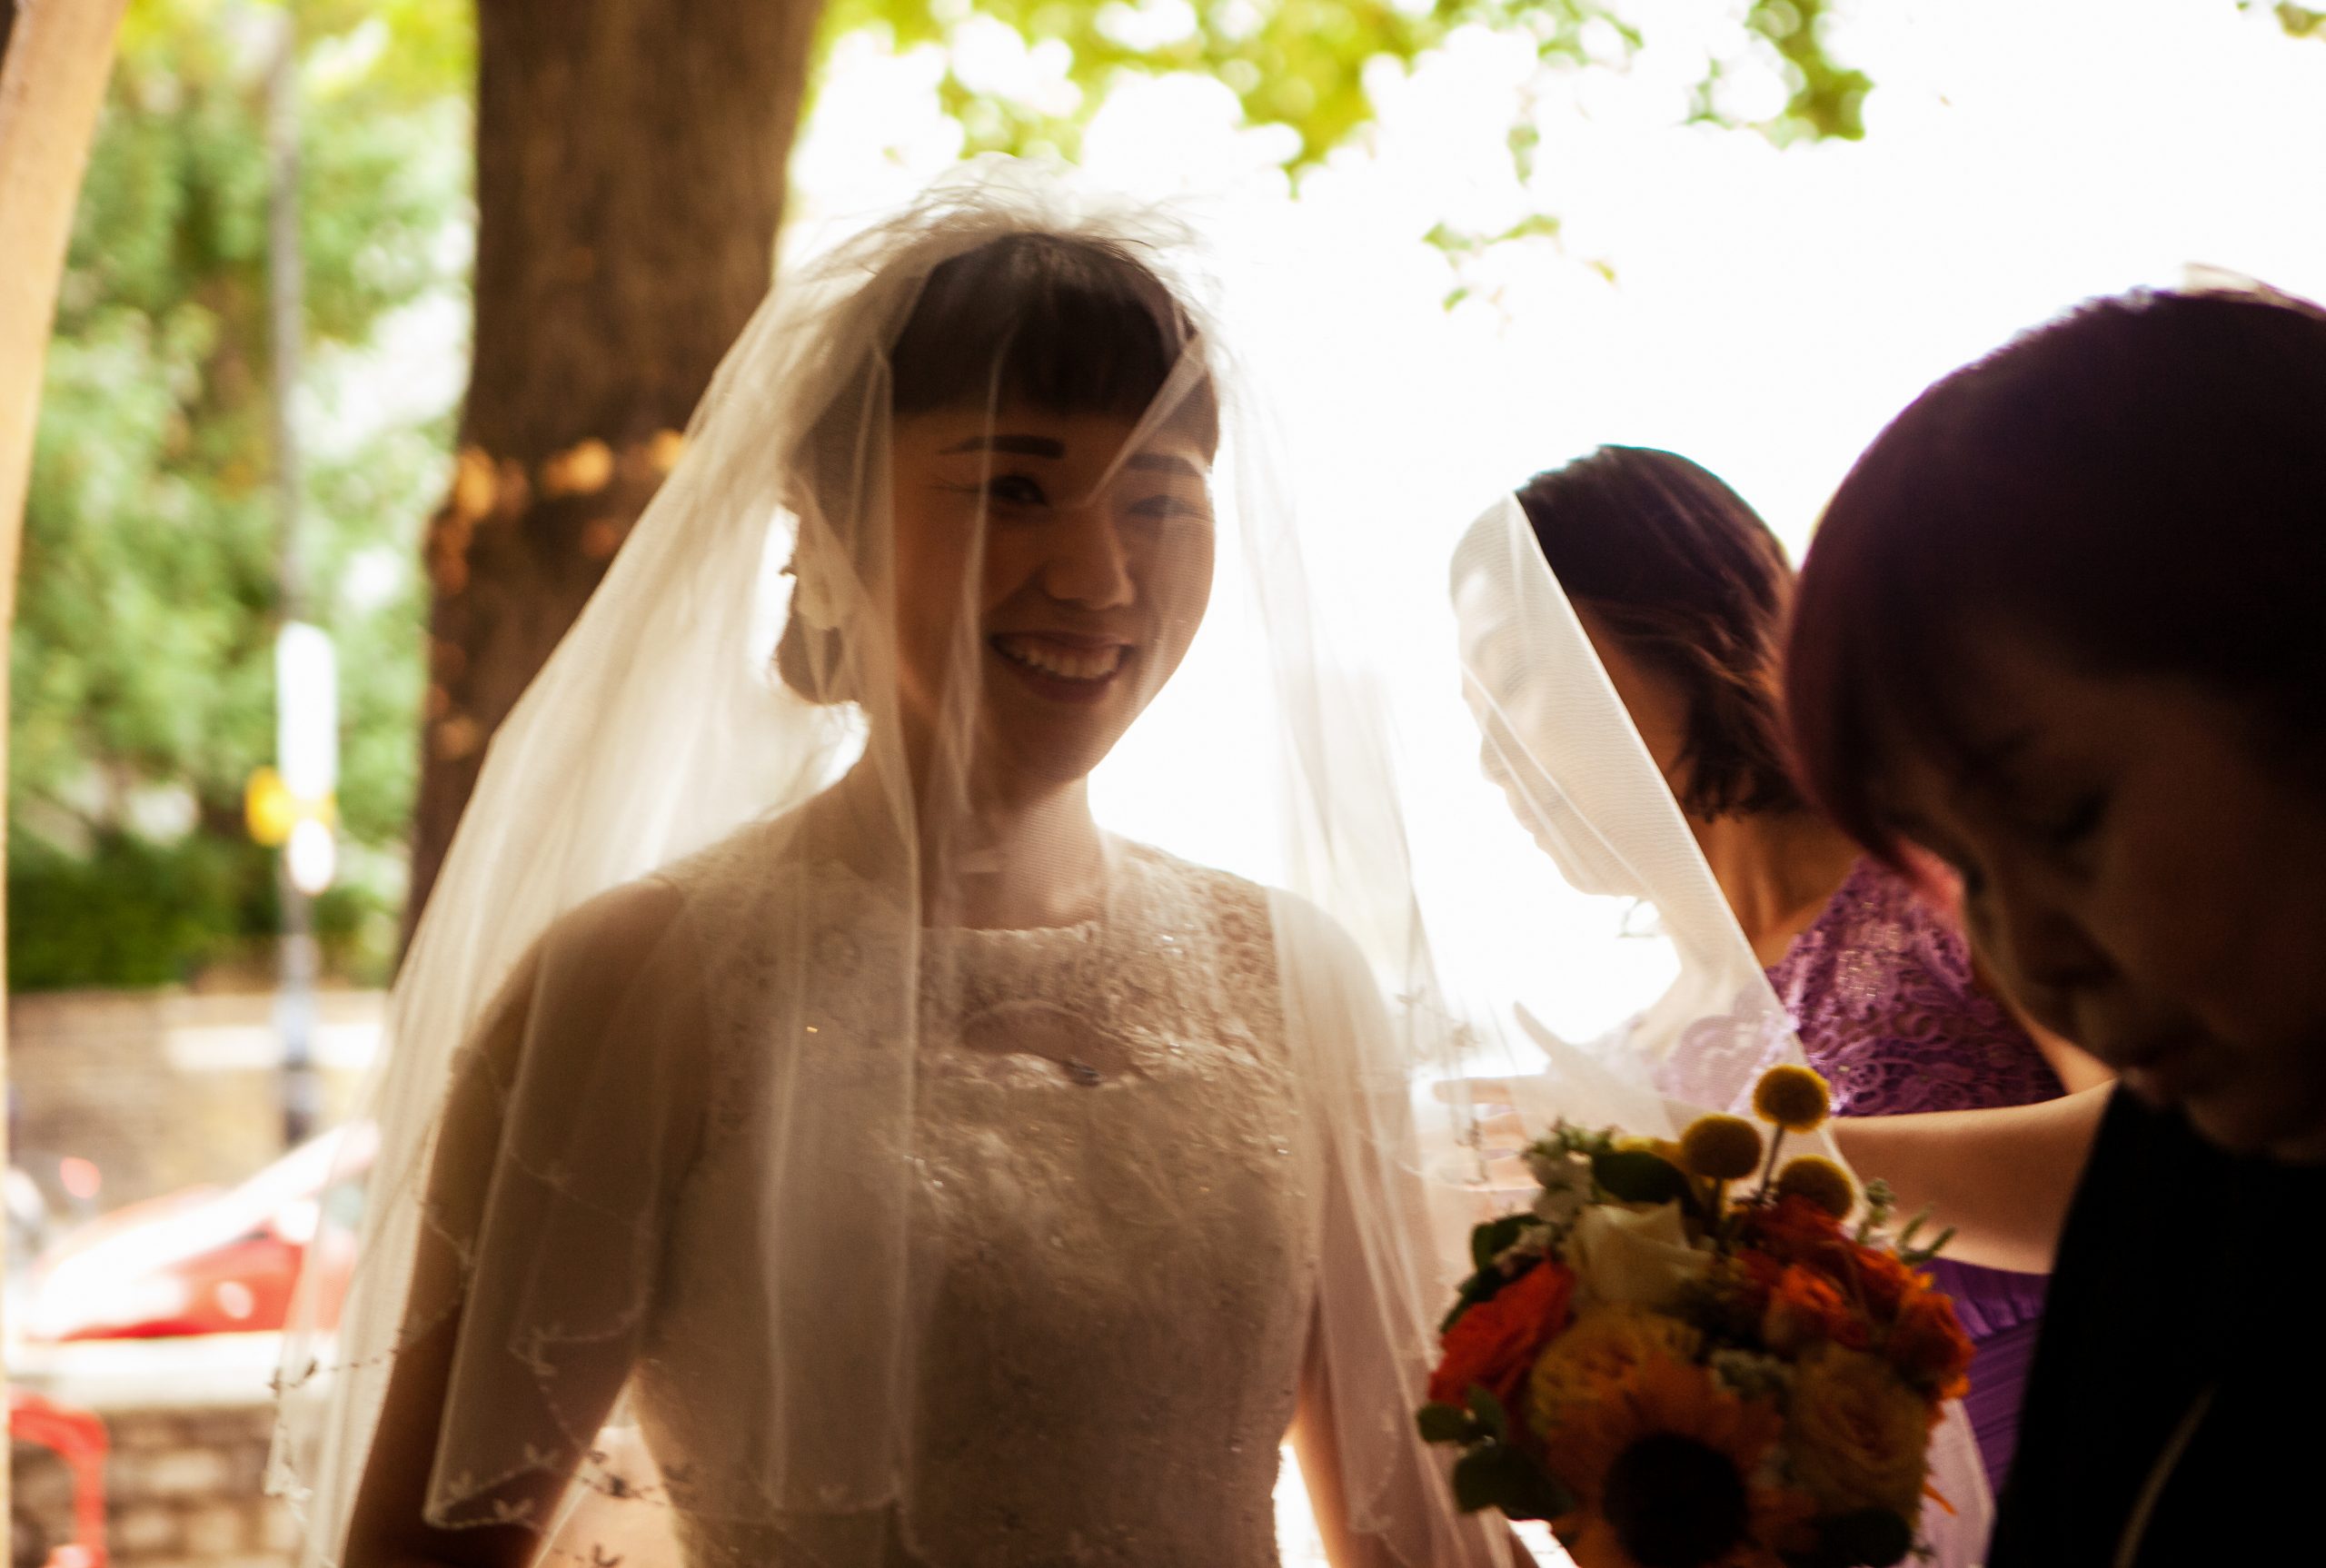 Close up of bride smiling under her veil